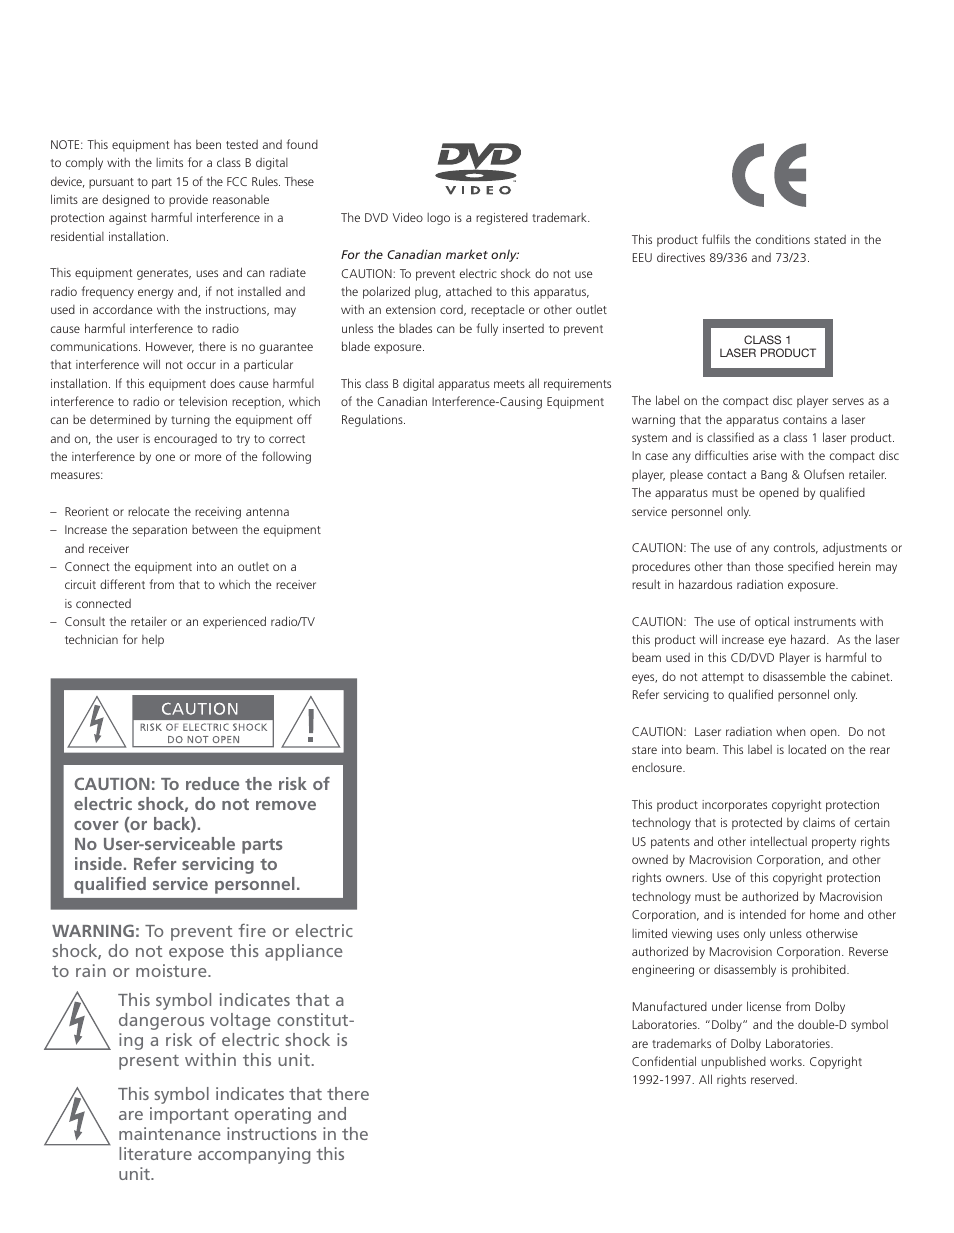 Bang & Olufsen DVD 1 - User Guide User Manual | Page 2 / 23 | Original mode